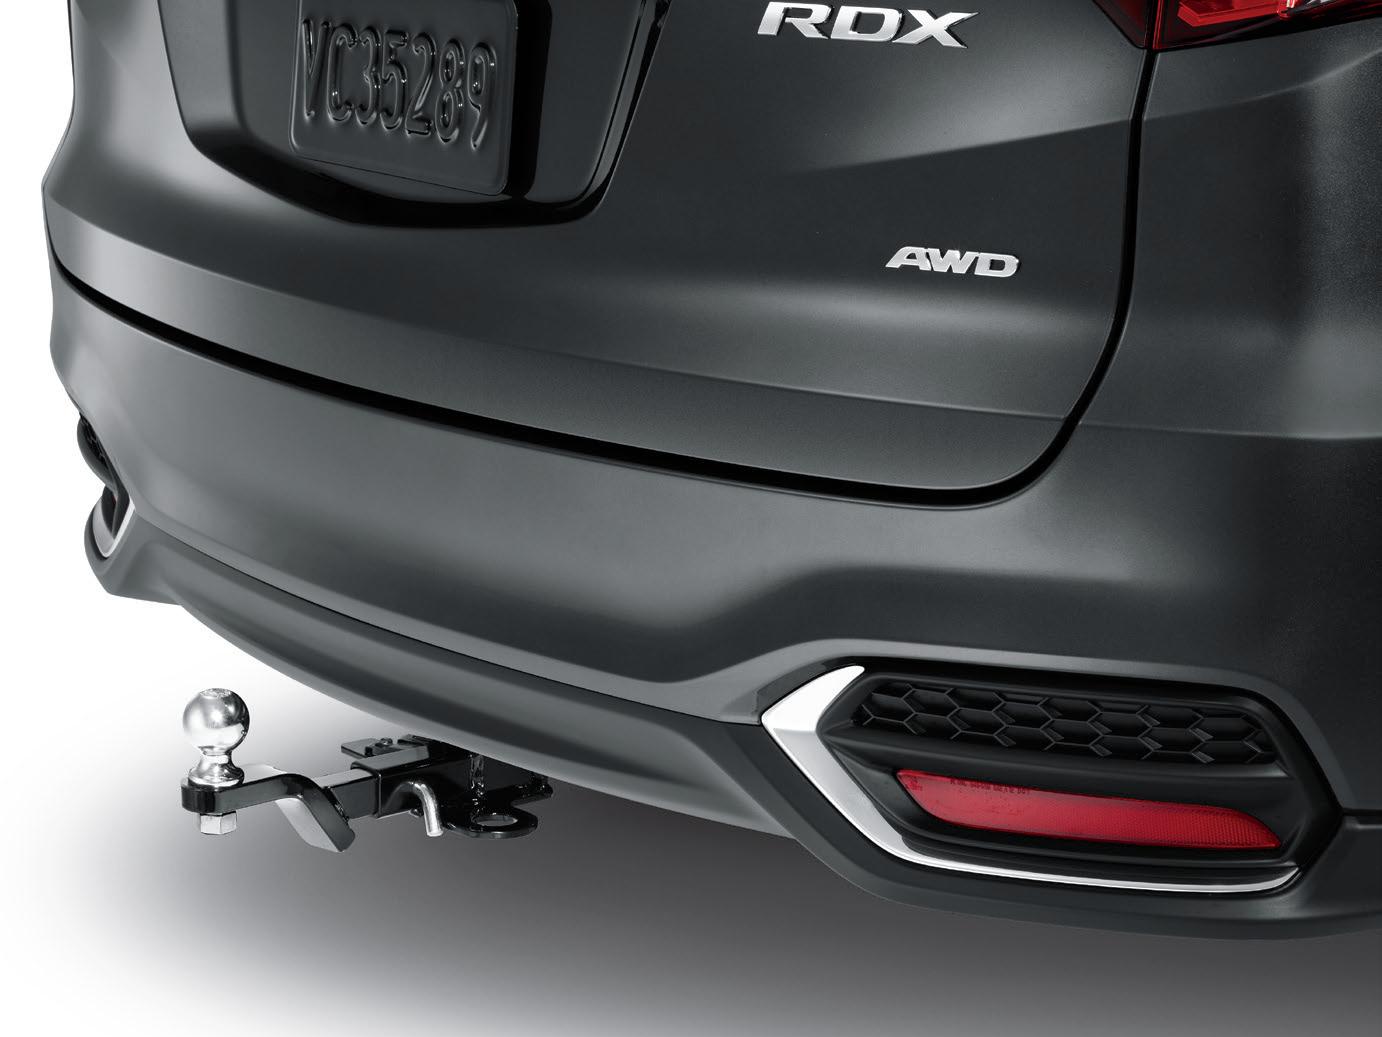 2016 Acura RDX Trailer Hitch - Wiring Harness 08L91-TX4-200